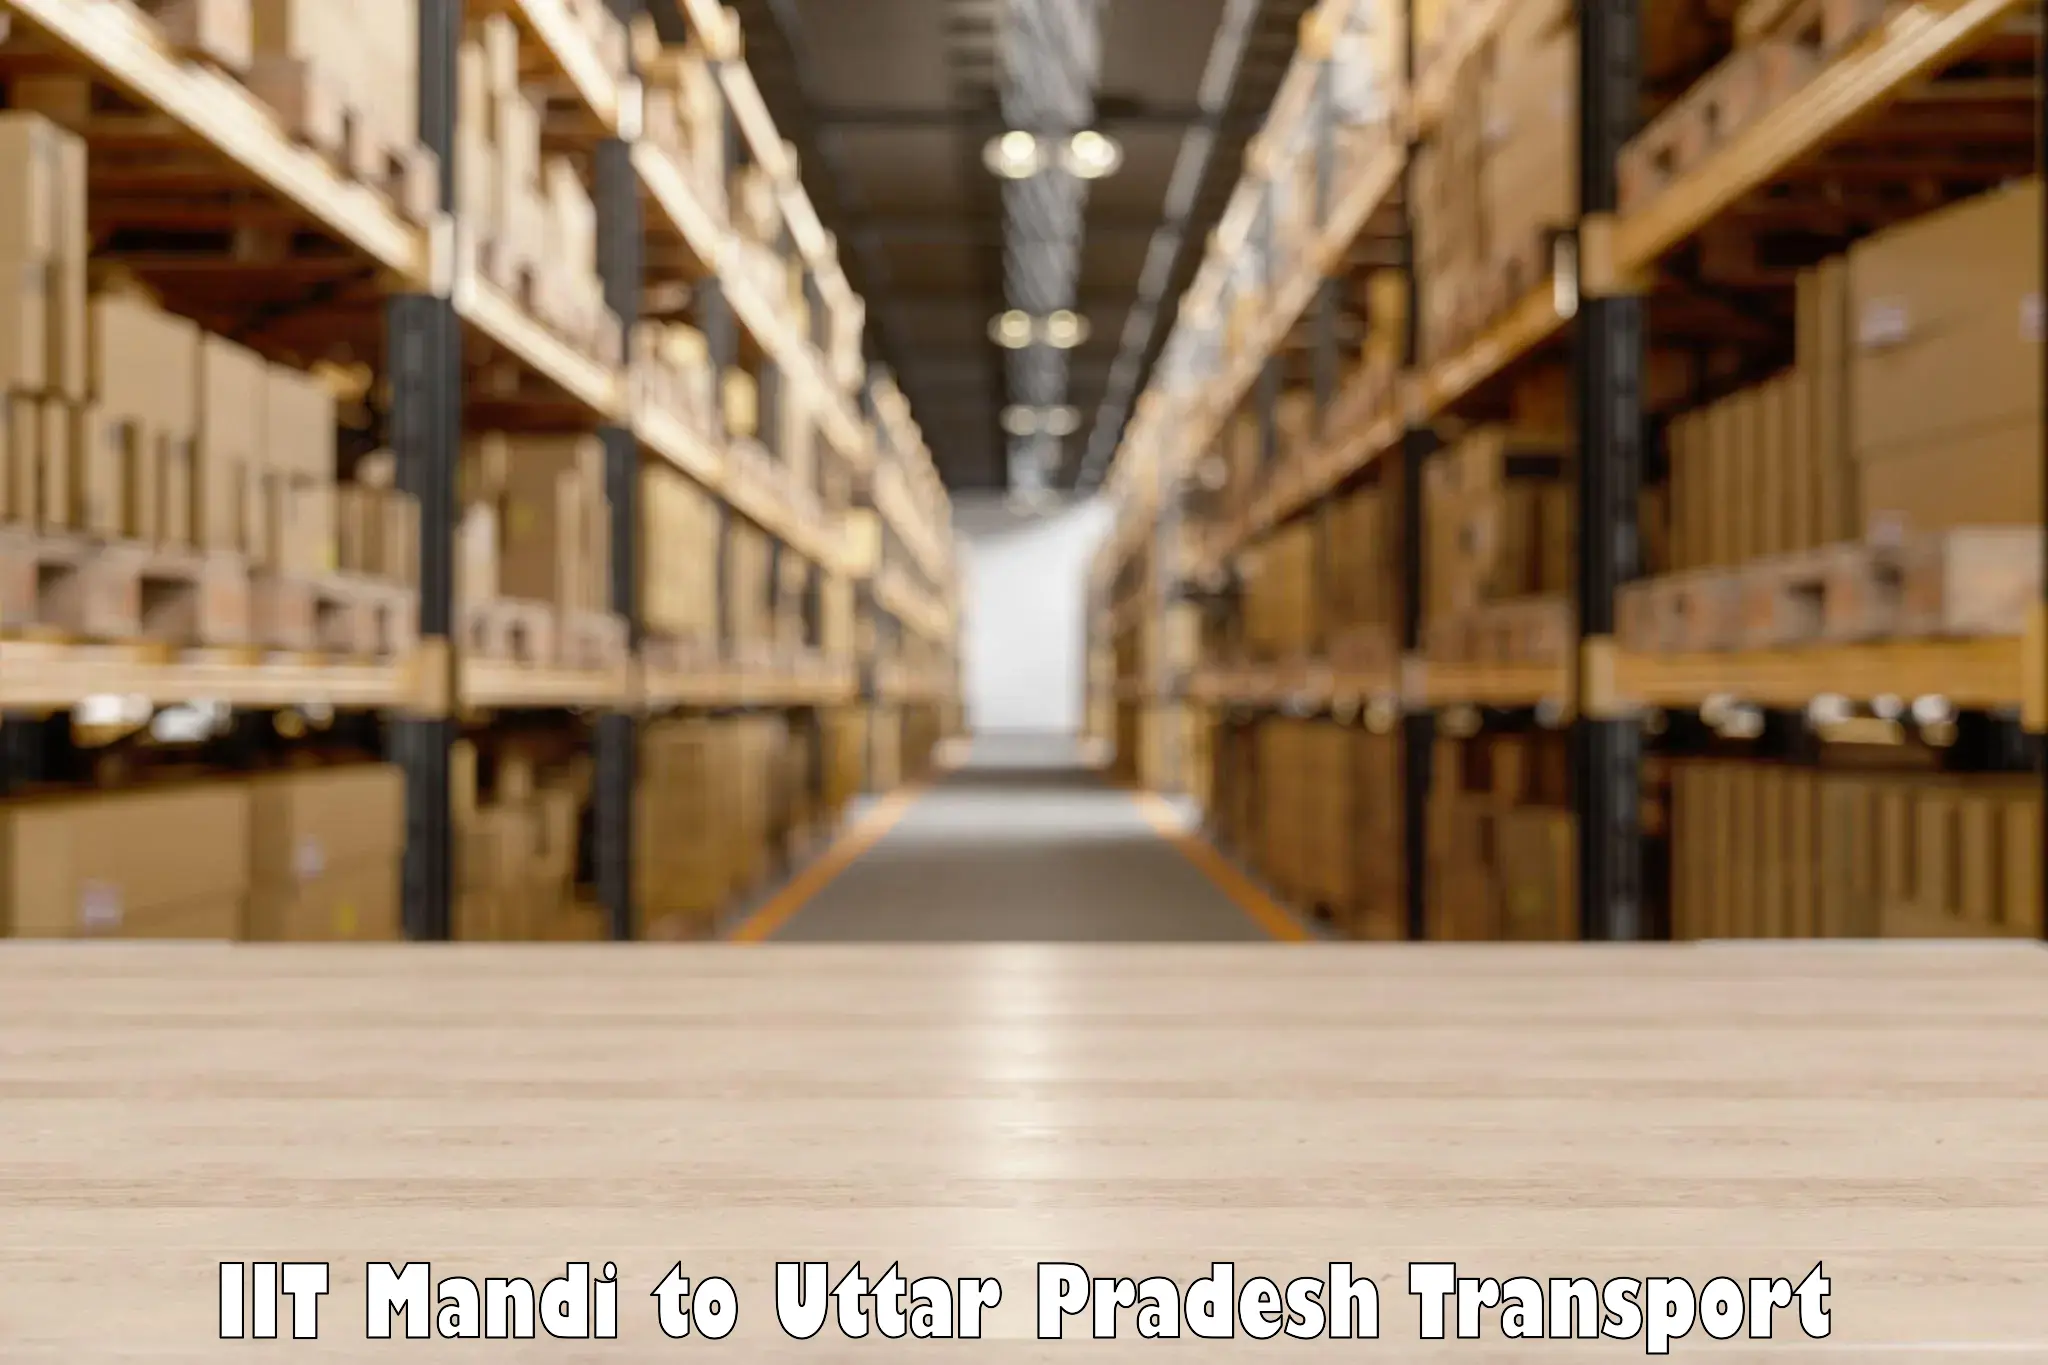 Transport in sharing IIT Mandi to Chitrakoot